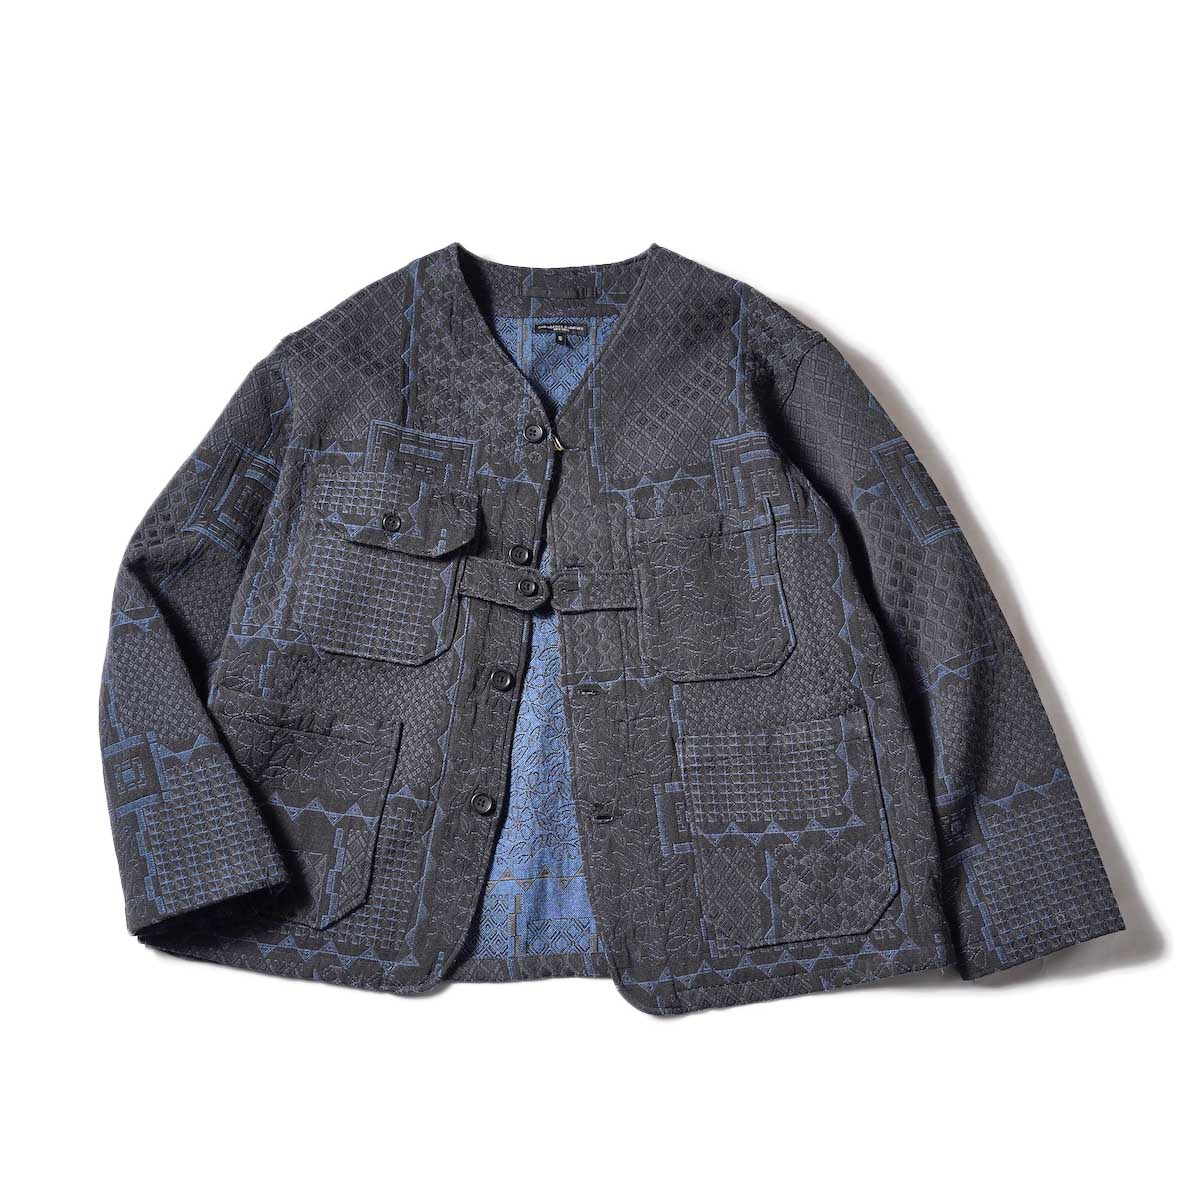 Engineered Garments / Cardigan Jacket - CP Geo Jacquard (Black / Navy)